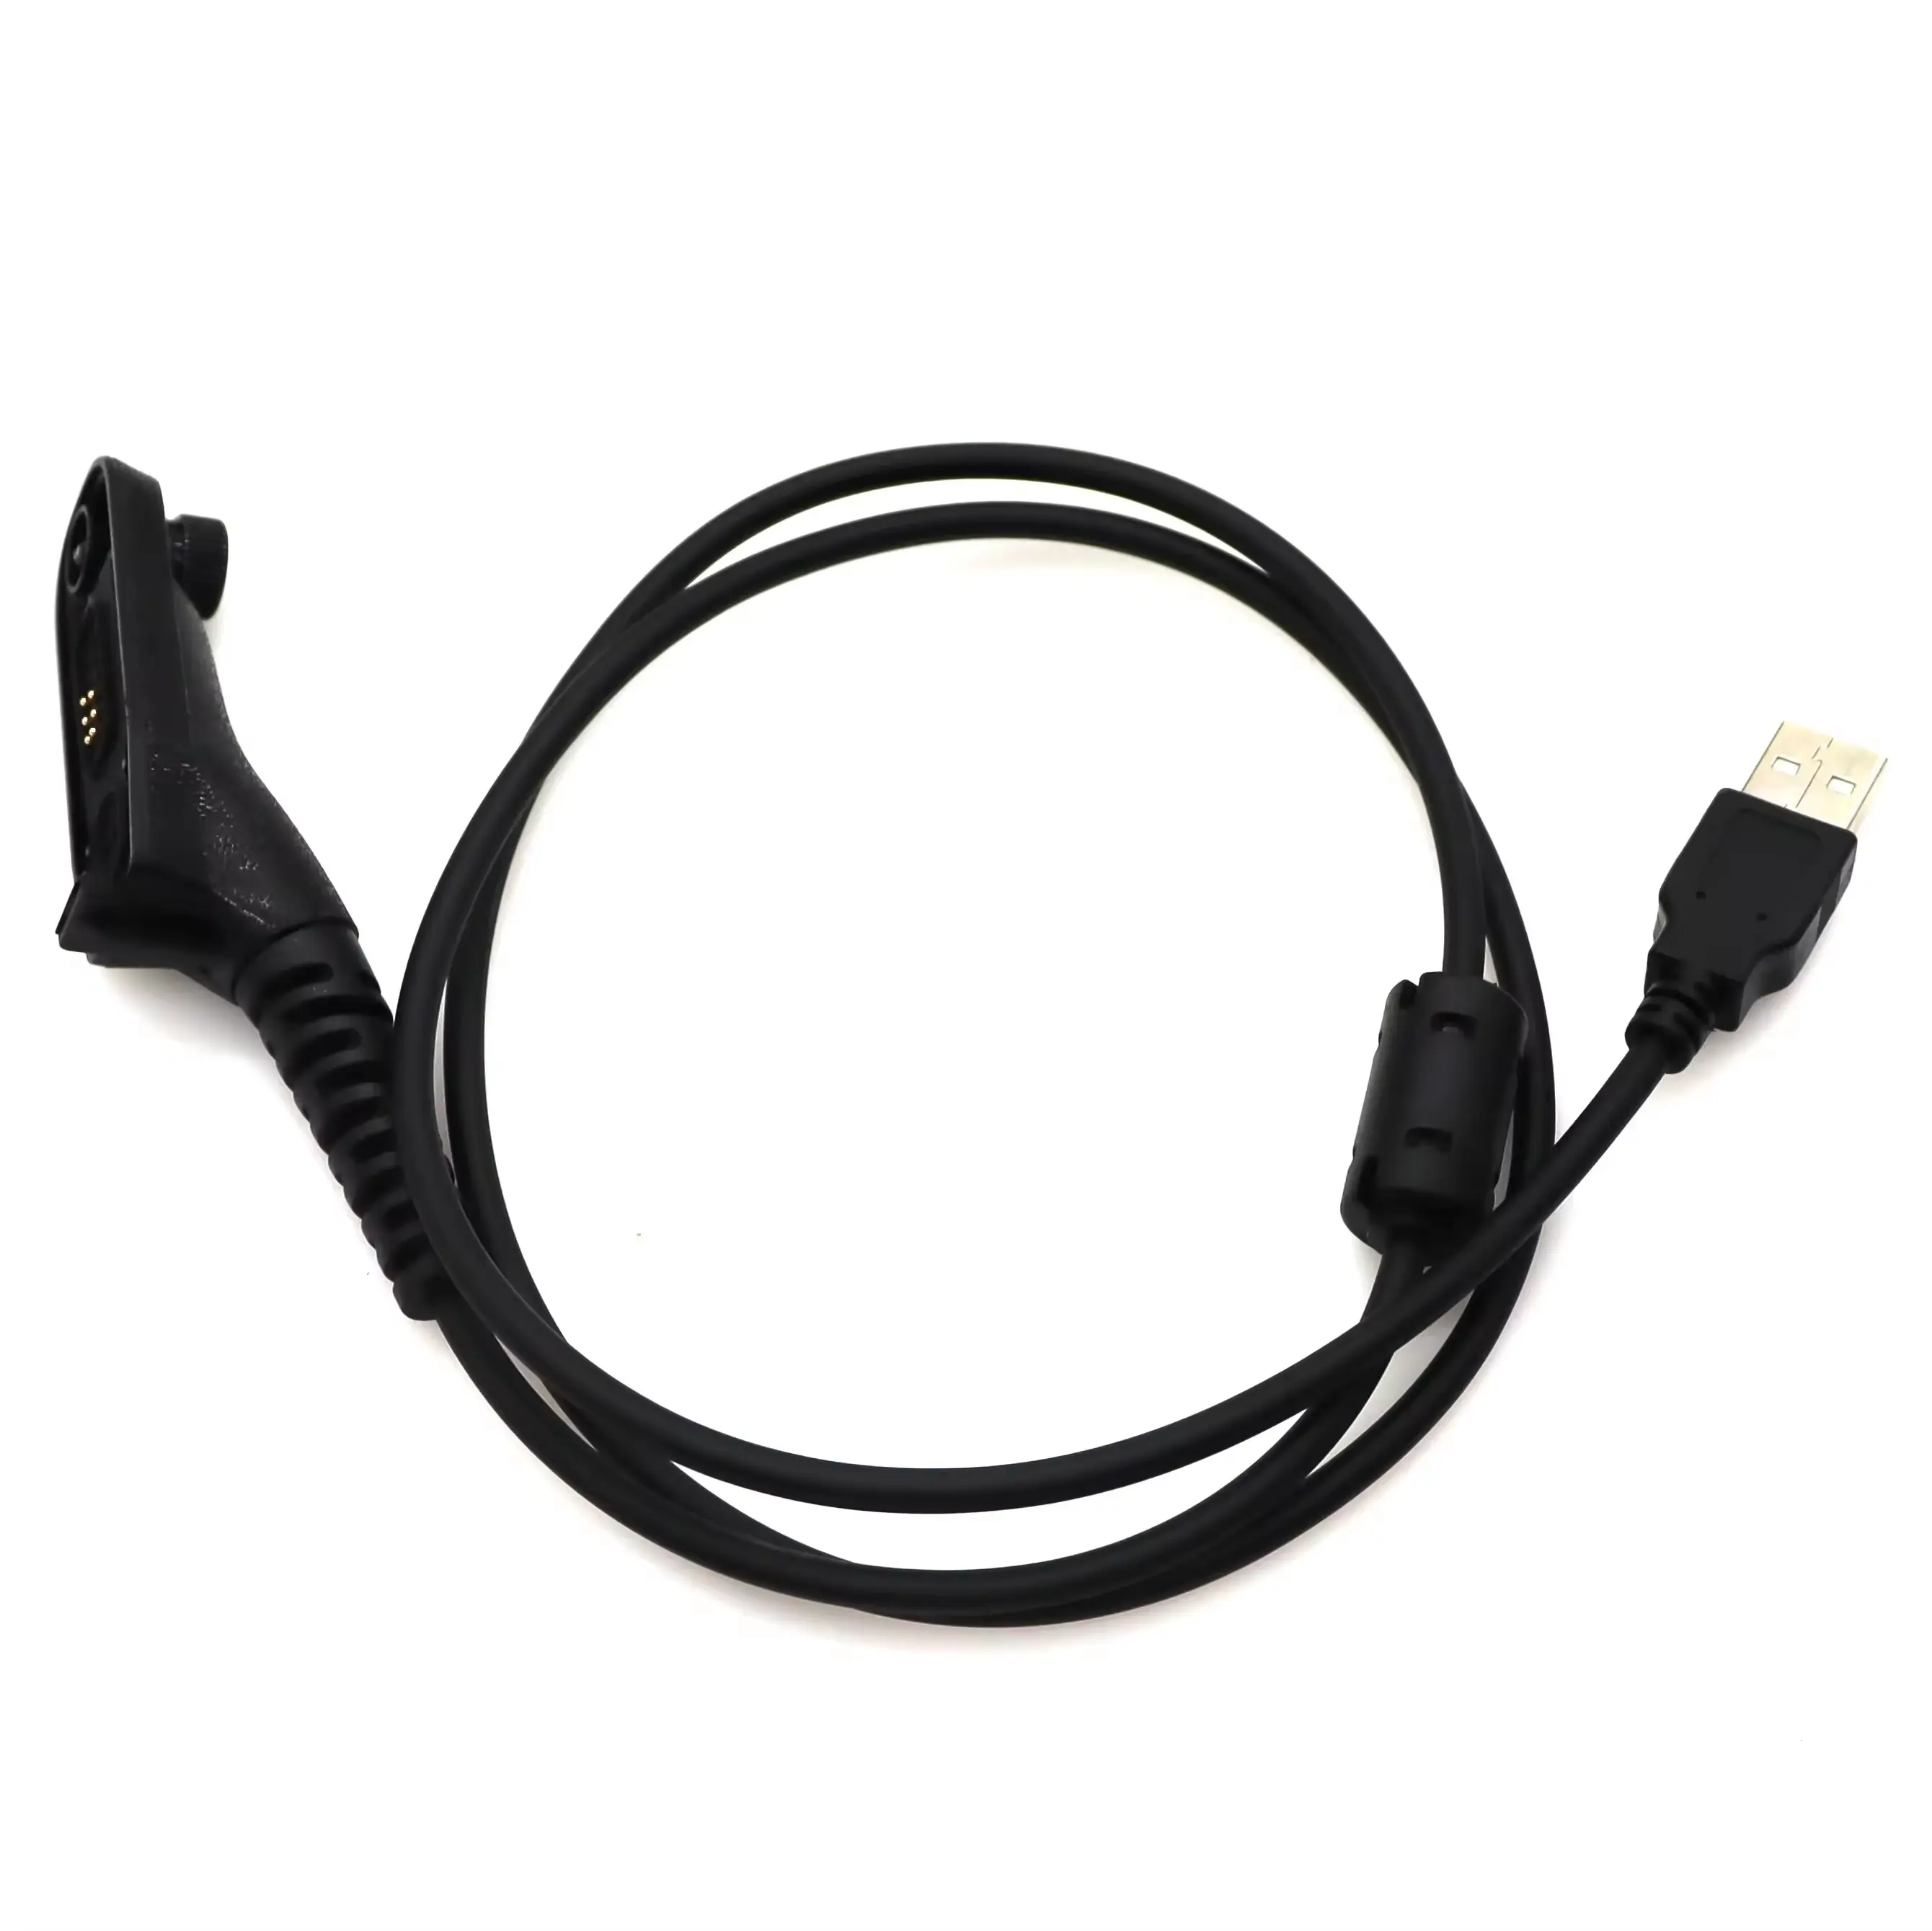 Walkie Talkie PMKN4012B USB Programming Data Cable for Motorala DP3600 DP3400 XPR6550 DGP6150 APX2000 APX6000 DGP4150 DGP8550